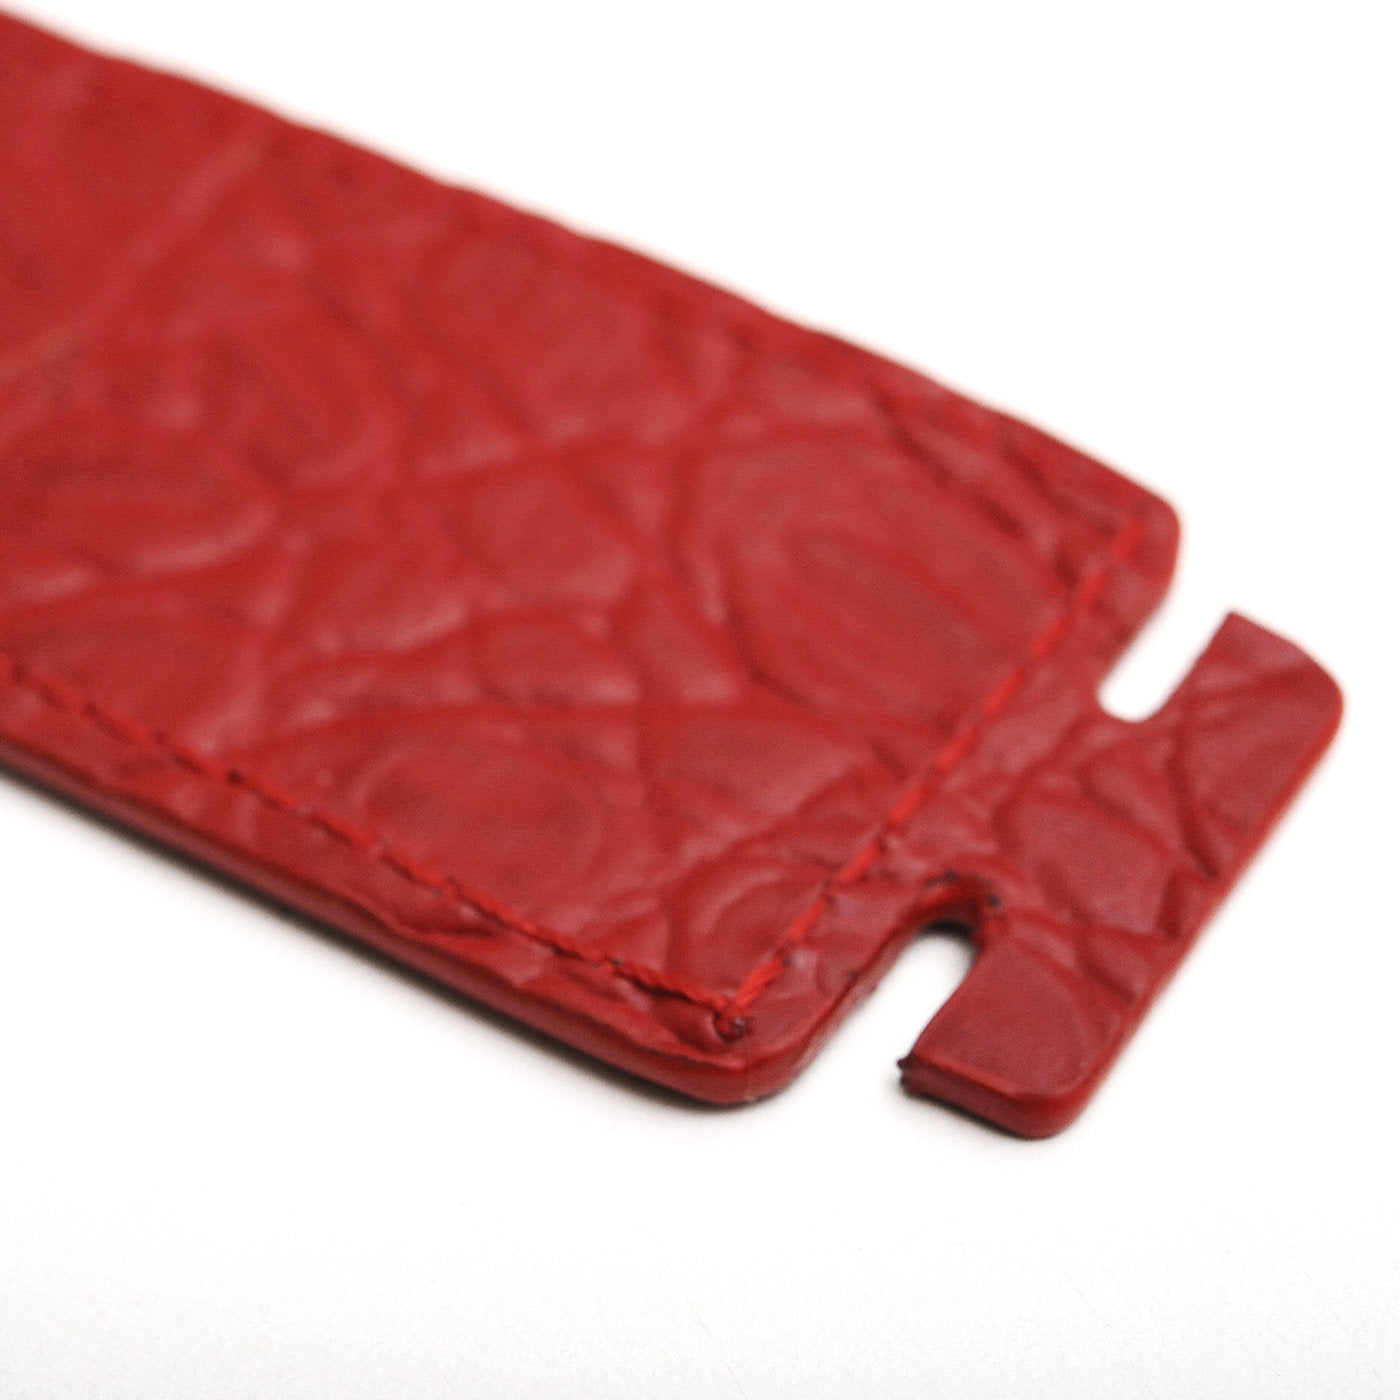 Kenya Medium Set of 2 Red Leather Placemats - Alternative view 1